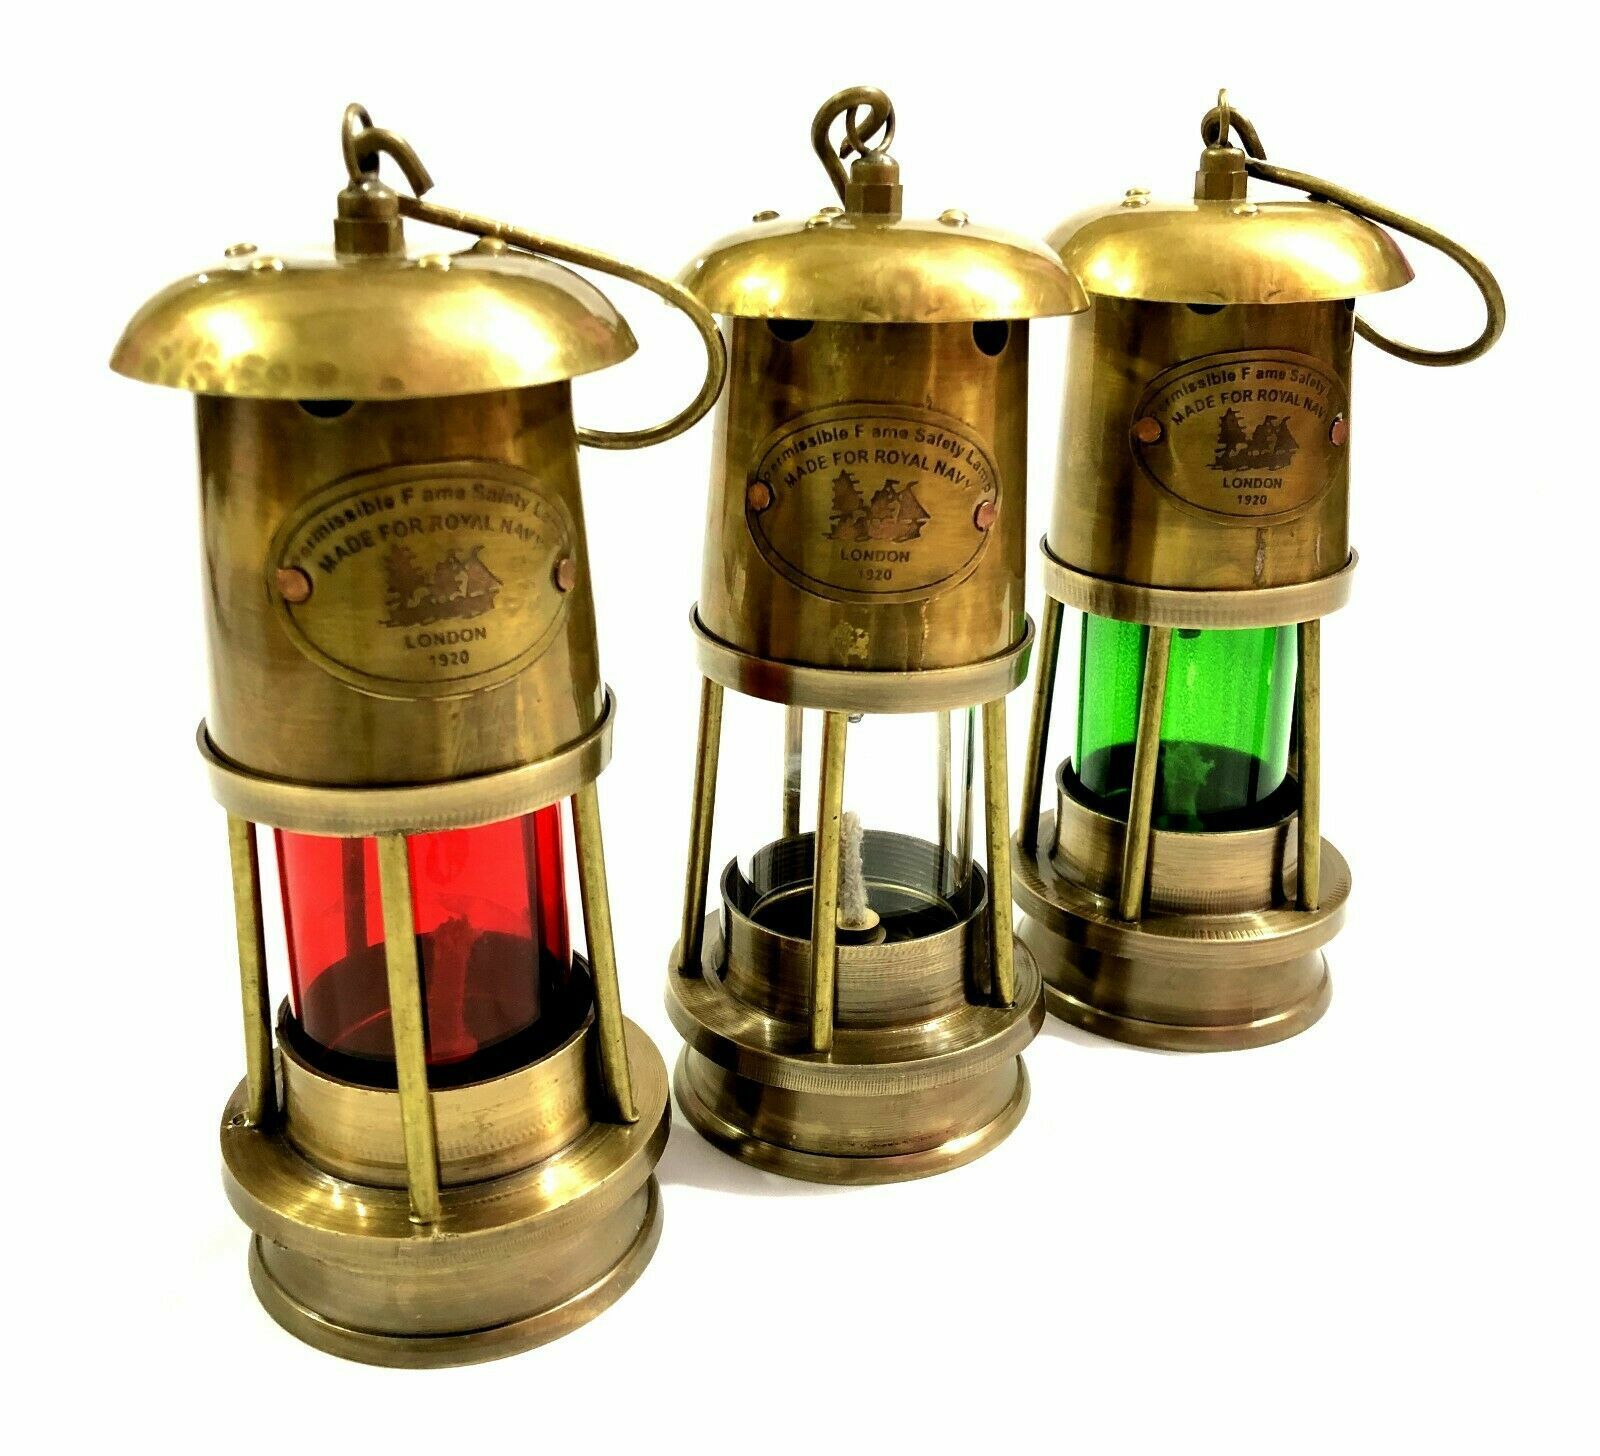 Set of 3 Brass Minor Lamp Dealing full price reduction Vintage Lante Ship Nautical Boat Light trust